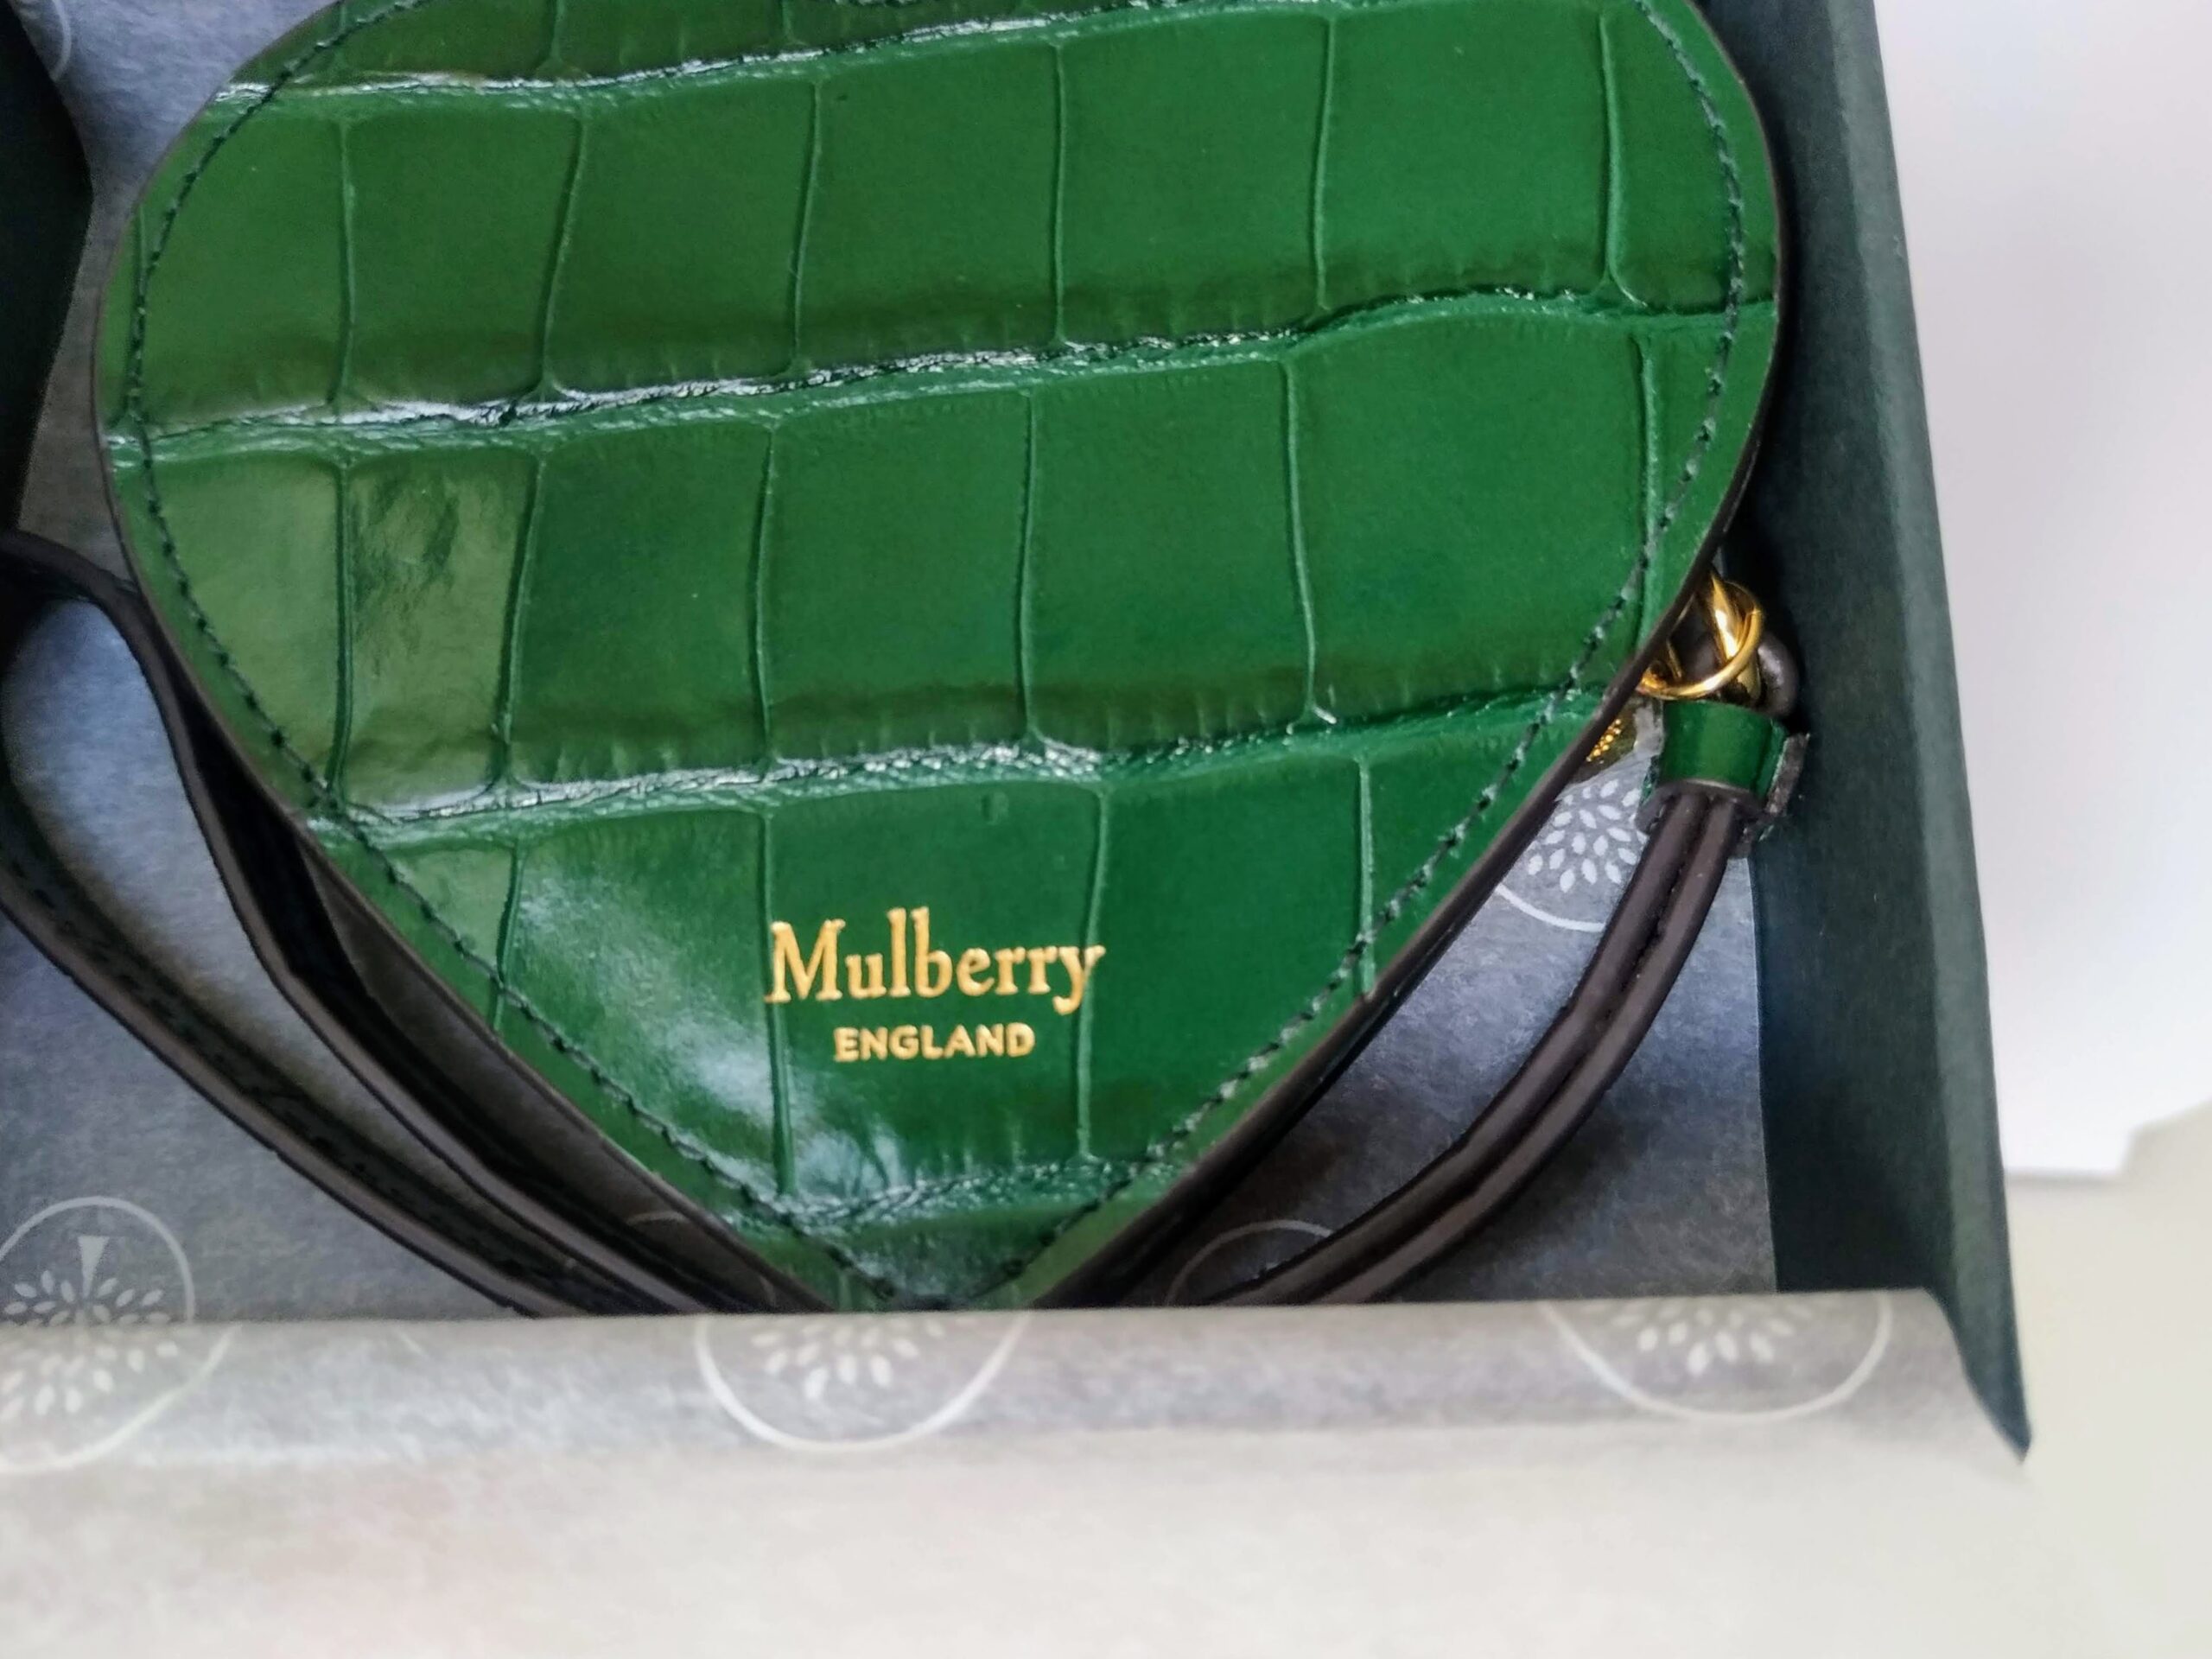 5A Women Purse Luxury Designer Handbag Kate Bags Crocodile Pattern Real  Leather Chain Shoulder Bag High Quality Tassel Bag From Cowboy688, $113.99  | DHgate.Com